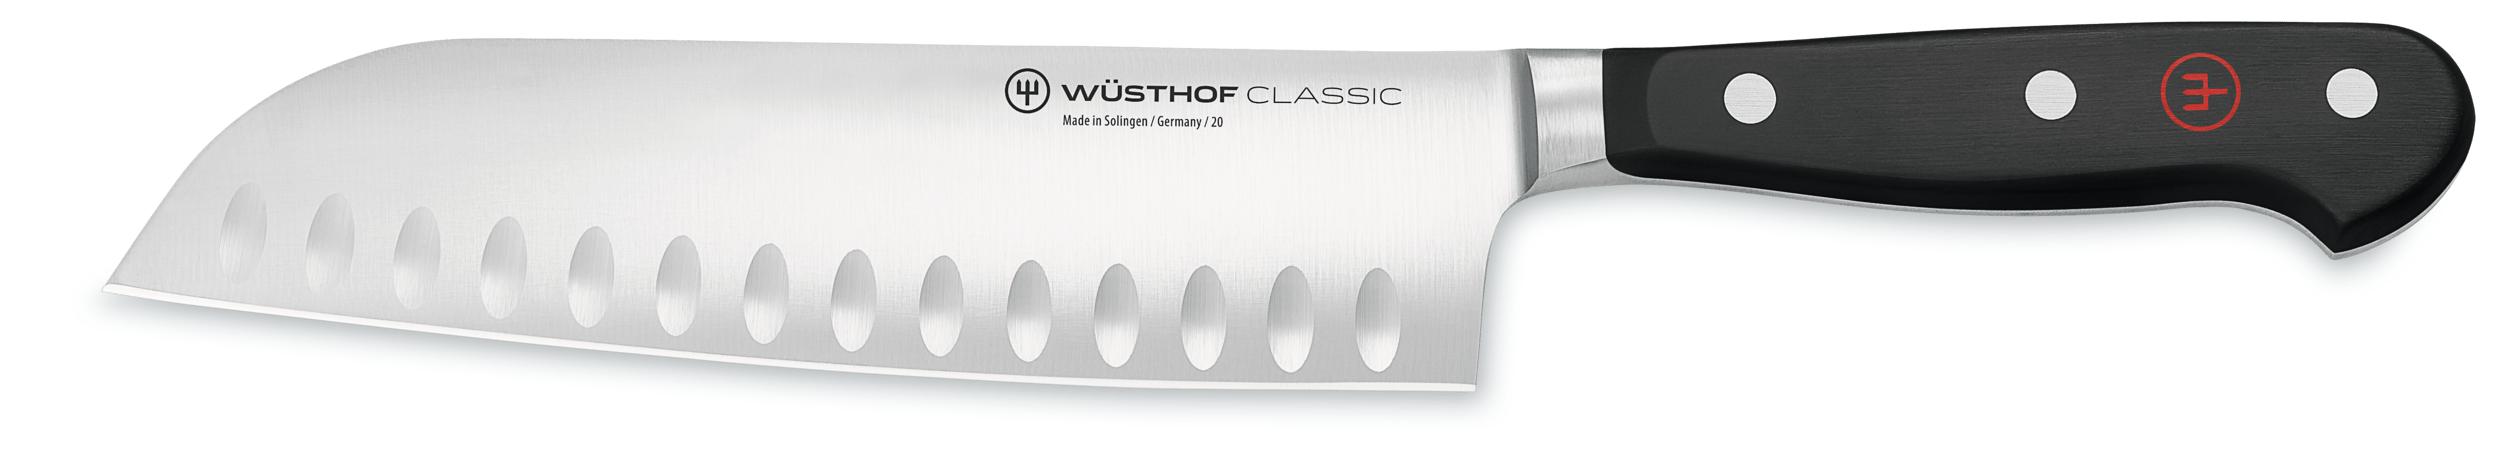 Wusthof Classic 2-Piece Santoku and Paring Knife Set 1120160201